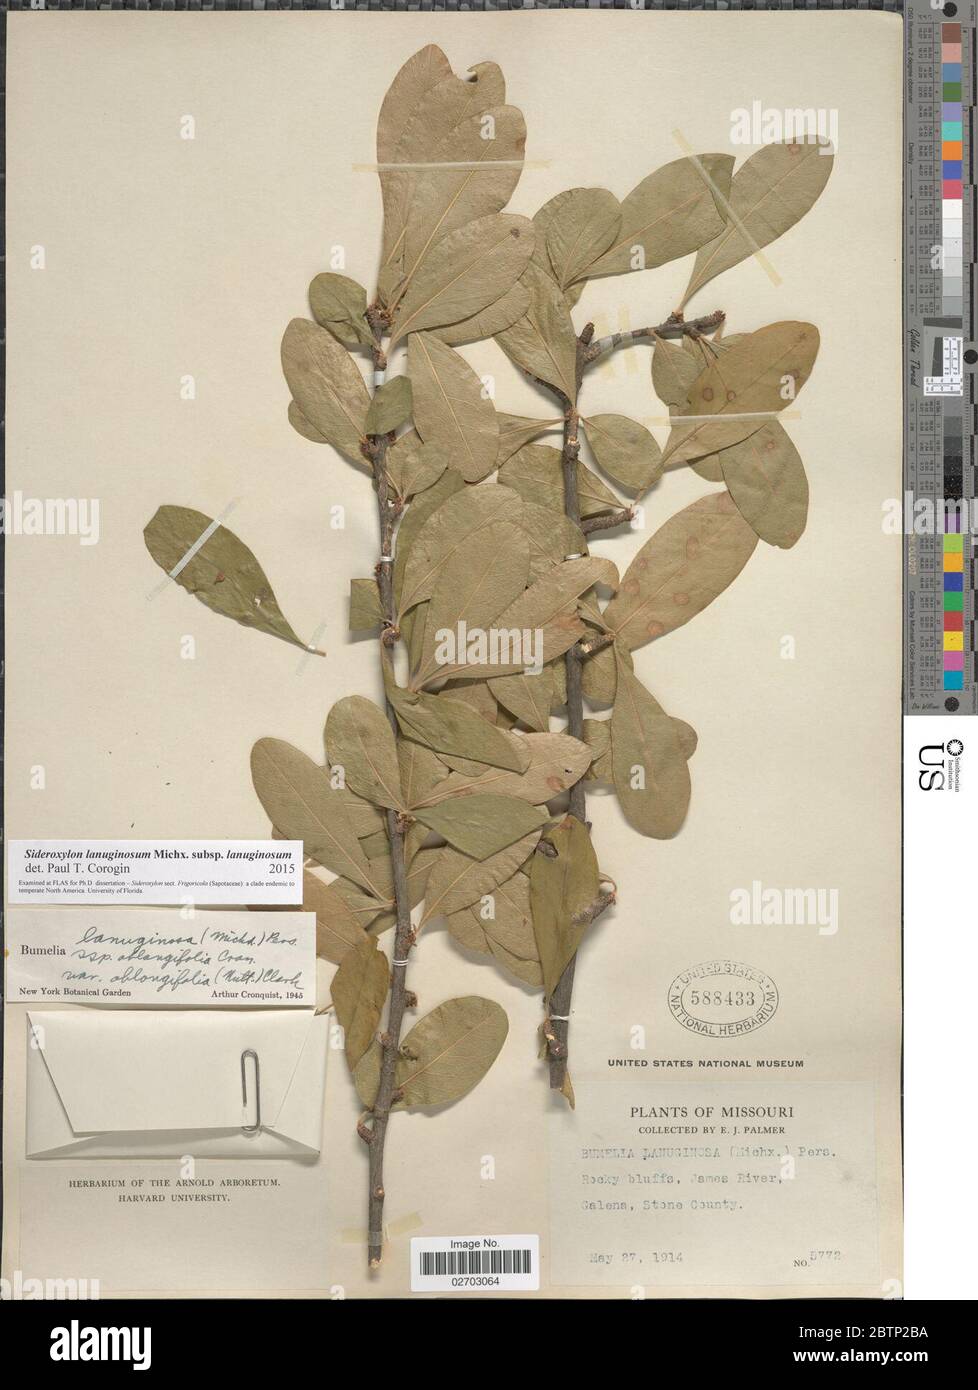 Sideroxylon lanuginosum subsp lanuginosum. Stock Photo